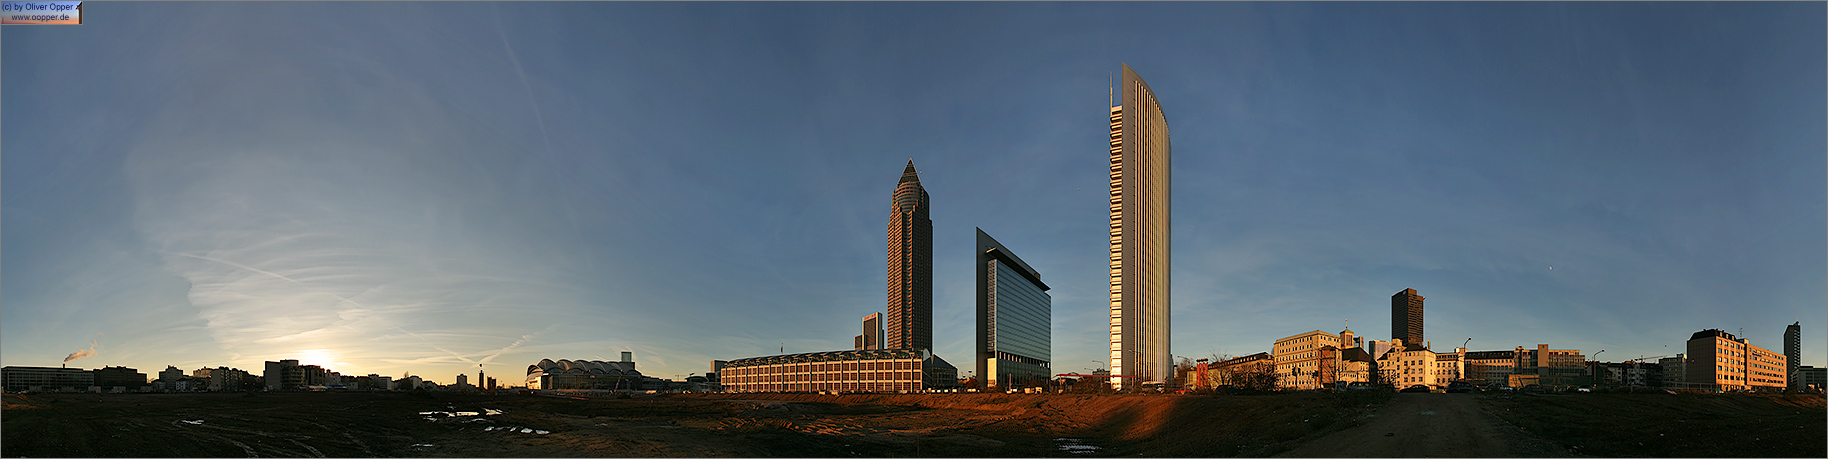 Panorama Frankfurt - Messegelnde - p057 - (c) by Oliver Opper